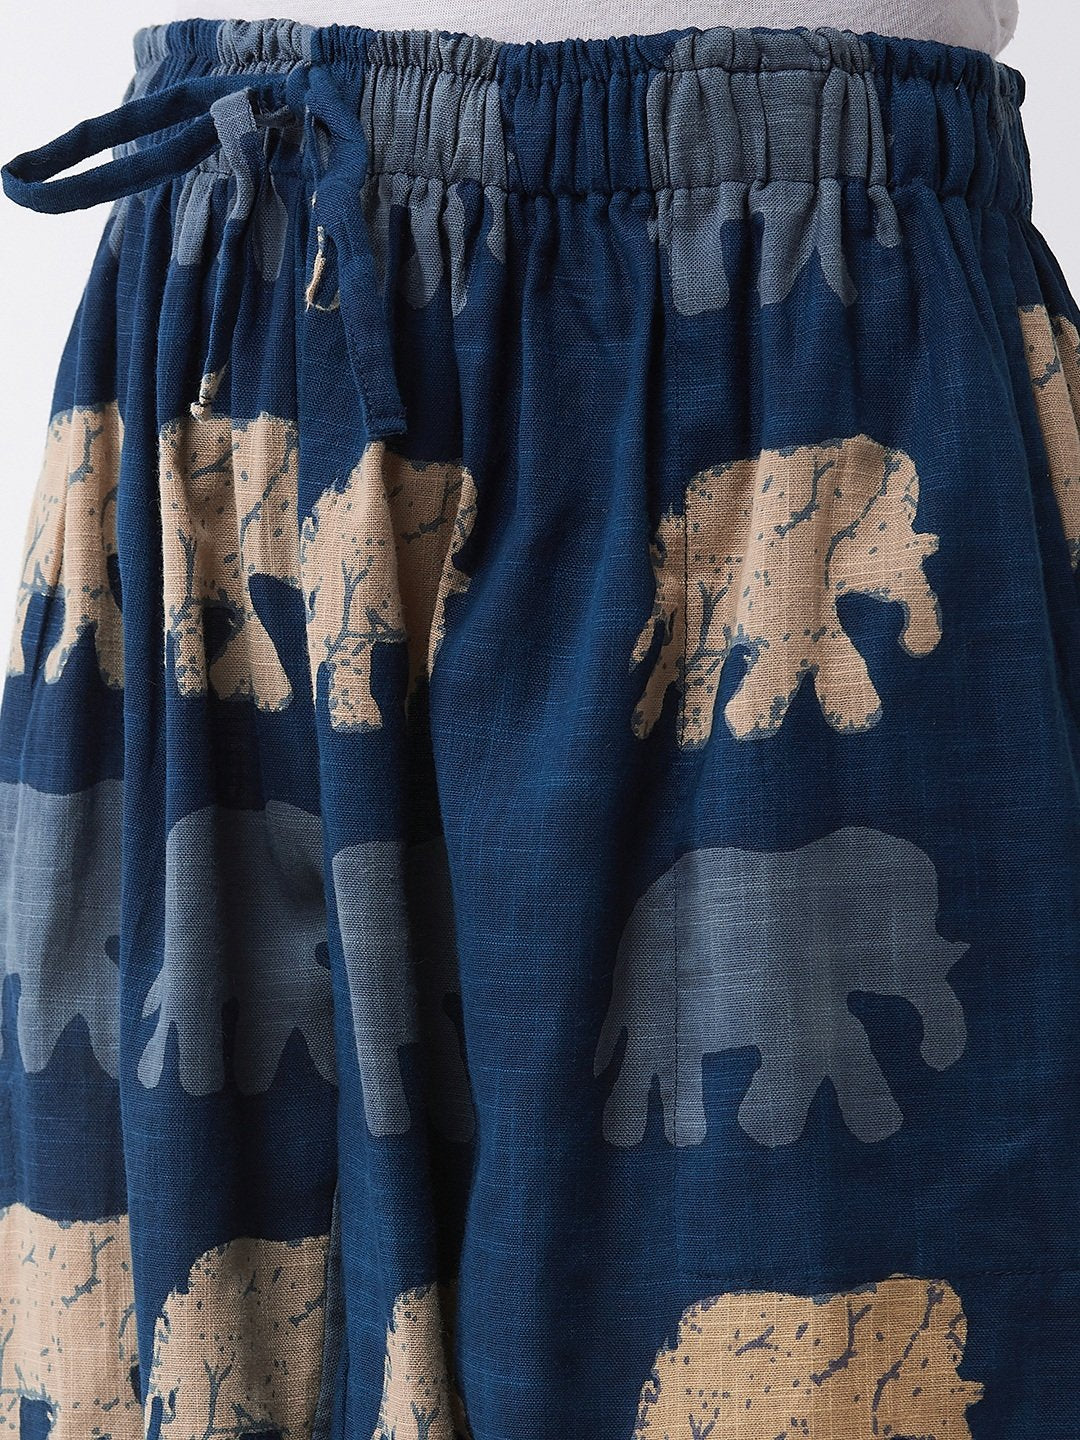 Elephant Print Harem Pants